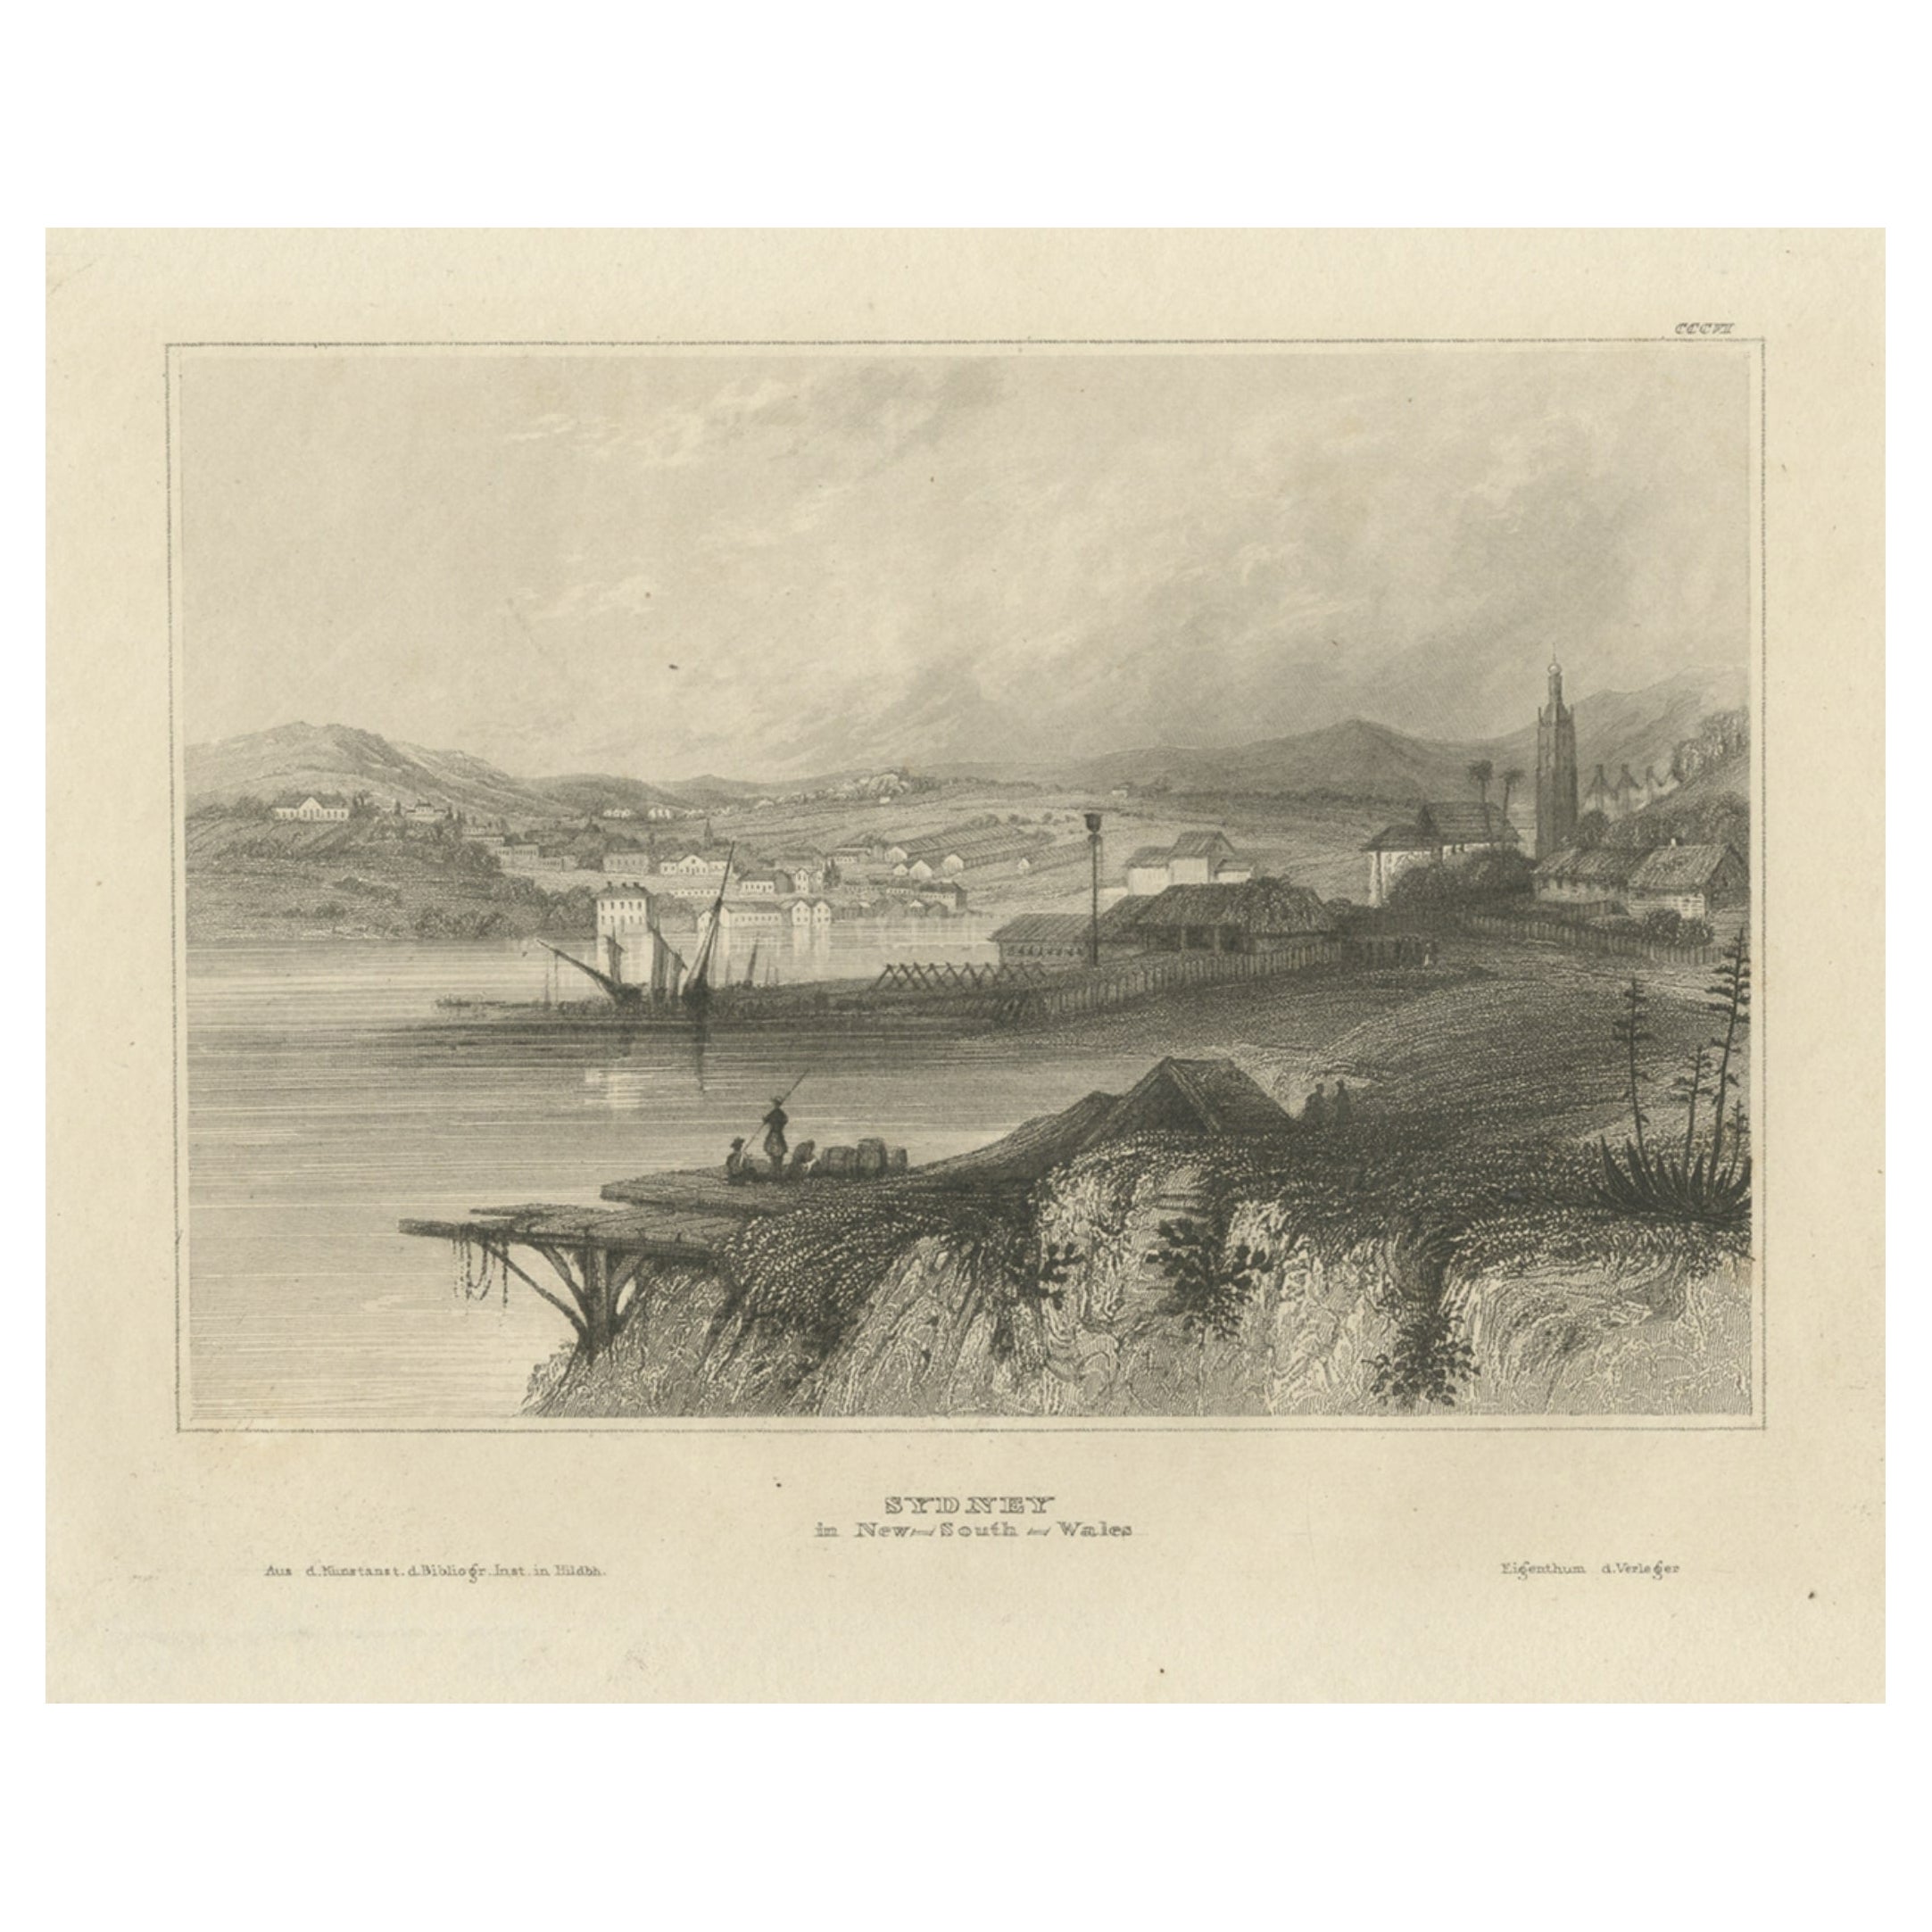 Antique Print of the City of Sydney in Australia, 1840